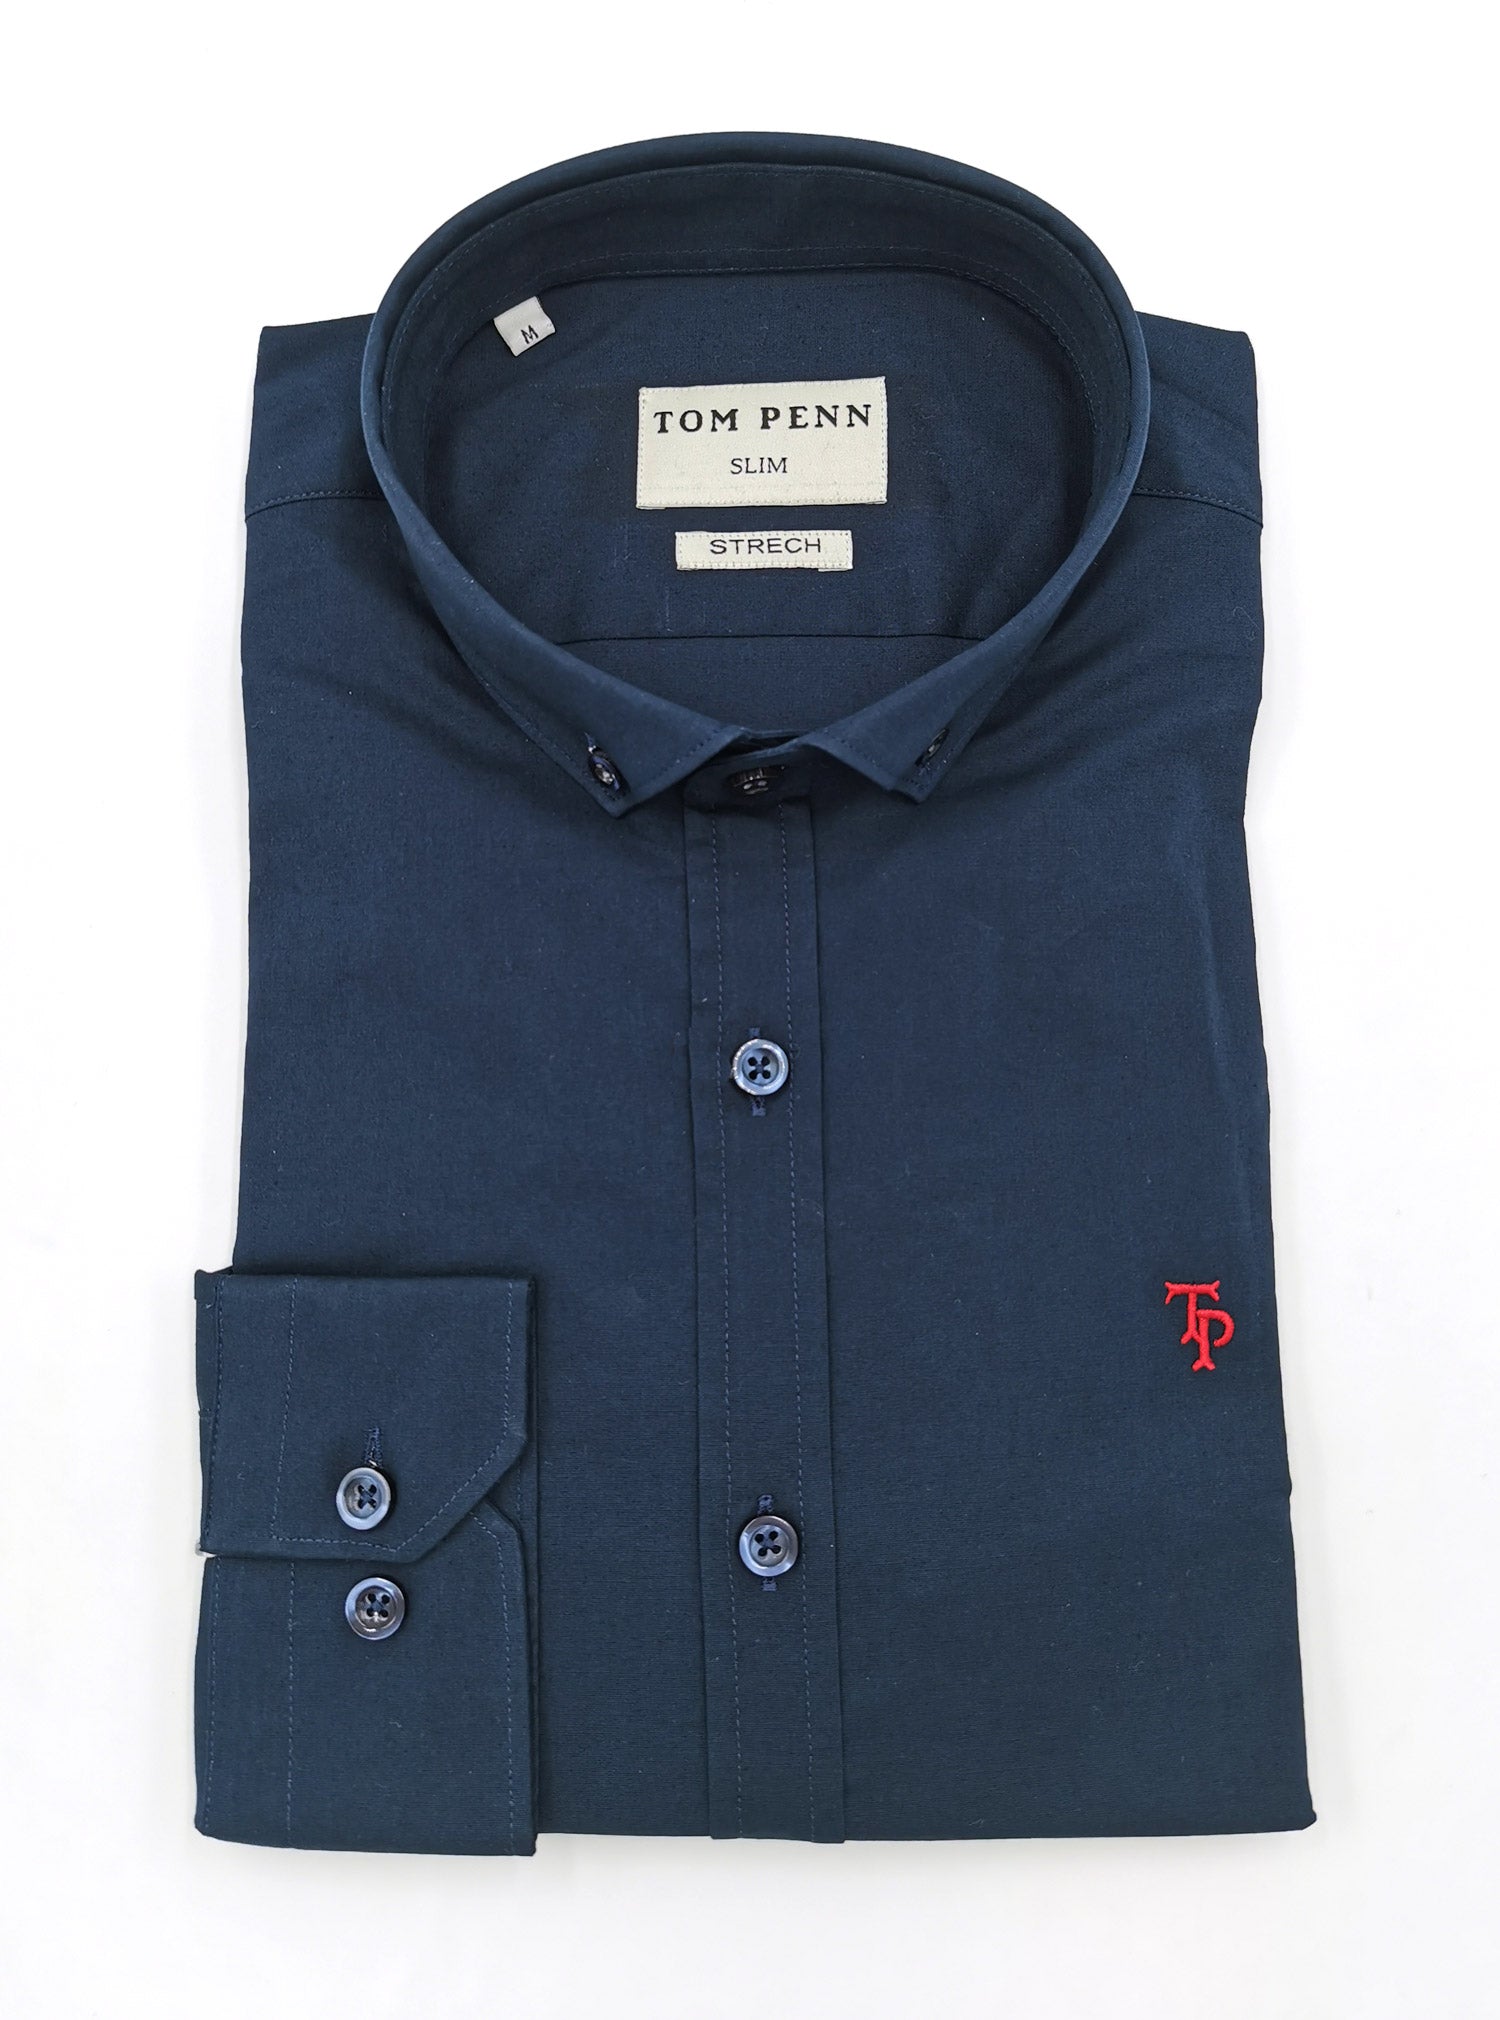 Tom Penn Button Down Slim Fit Shirt - Spirit Clothing